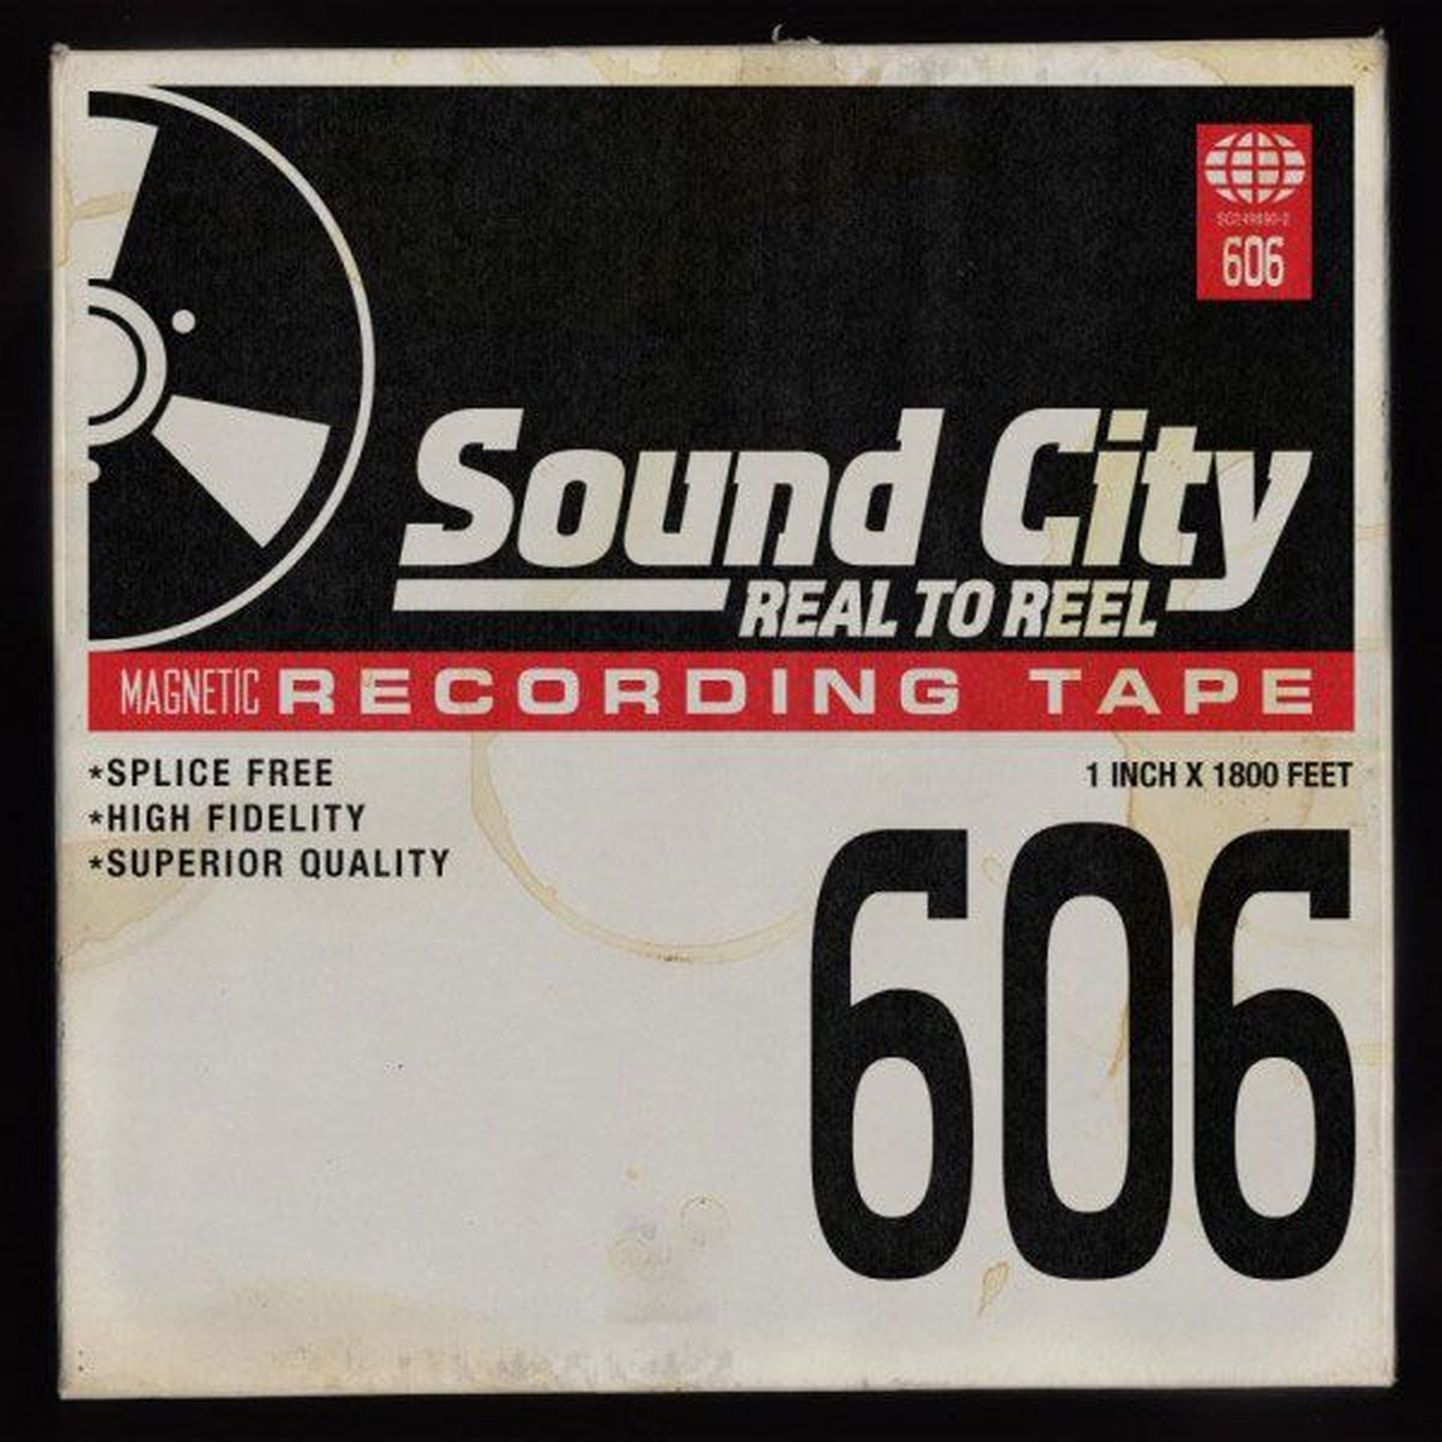 Eri esitajad
Sound City: Real to Reel 
(Sony)